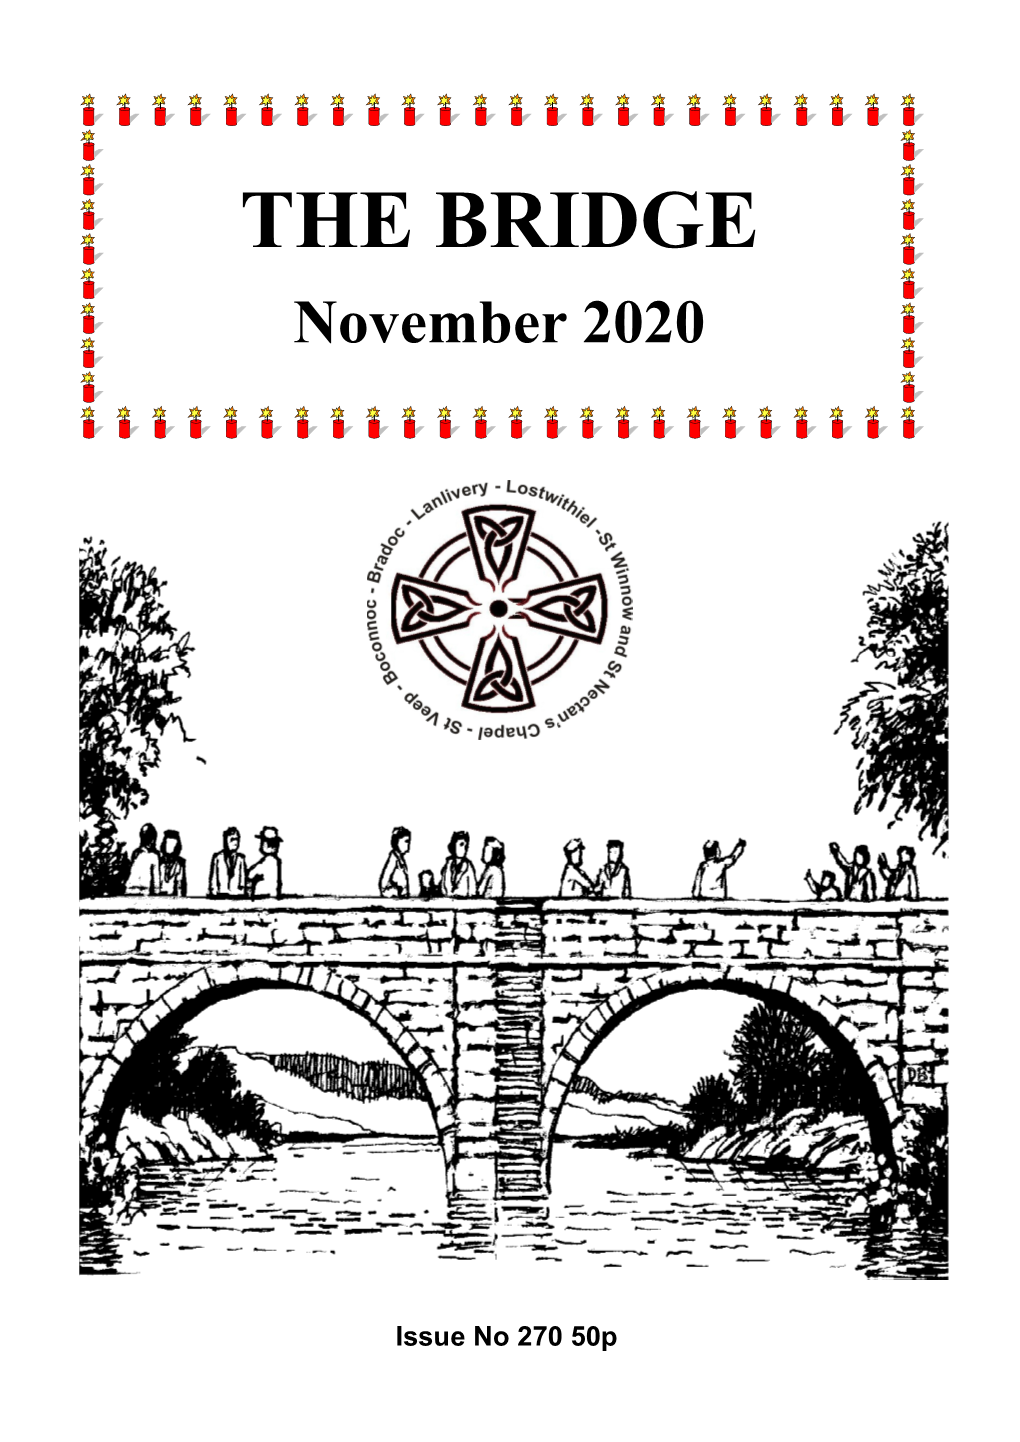 THE BRIDGE November 2020